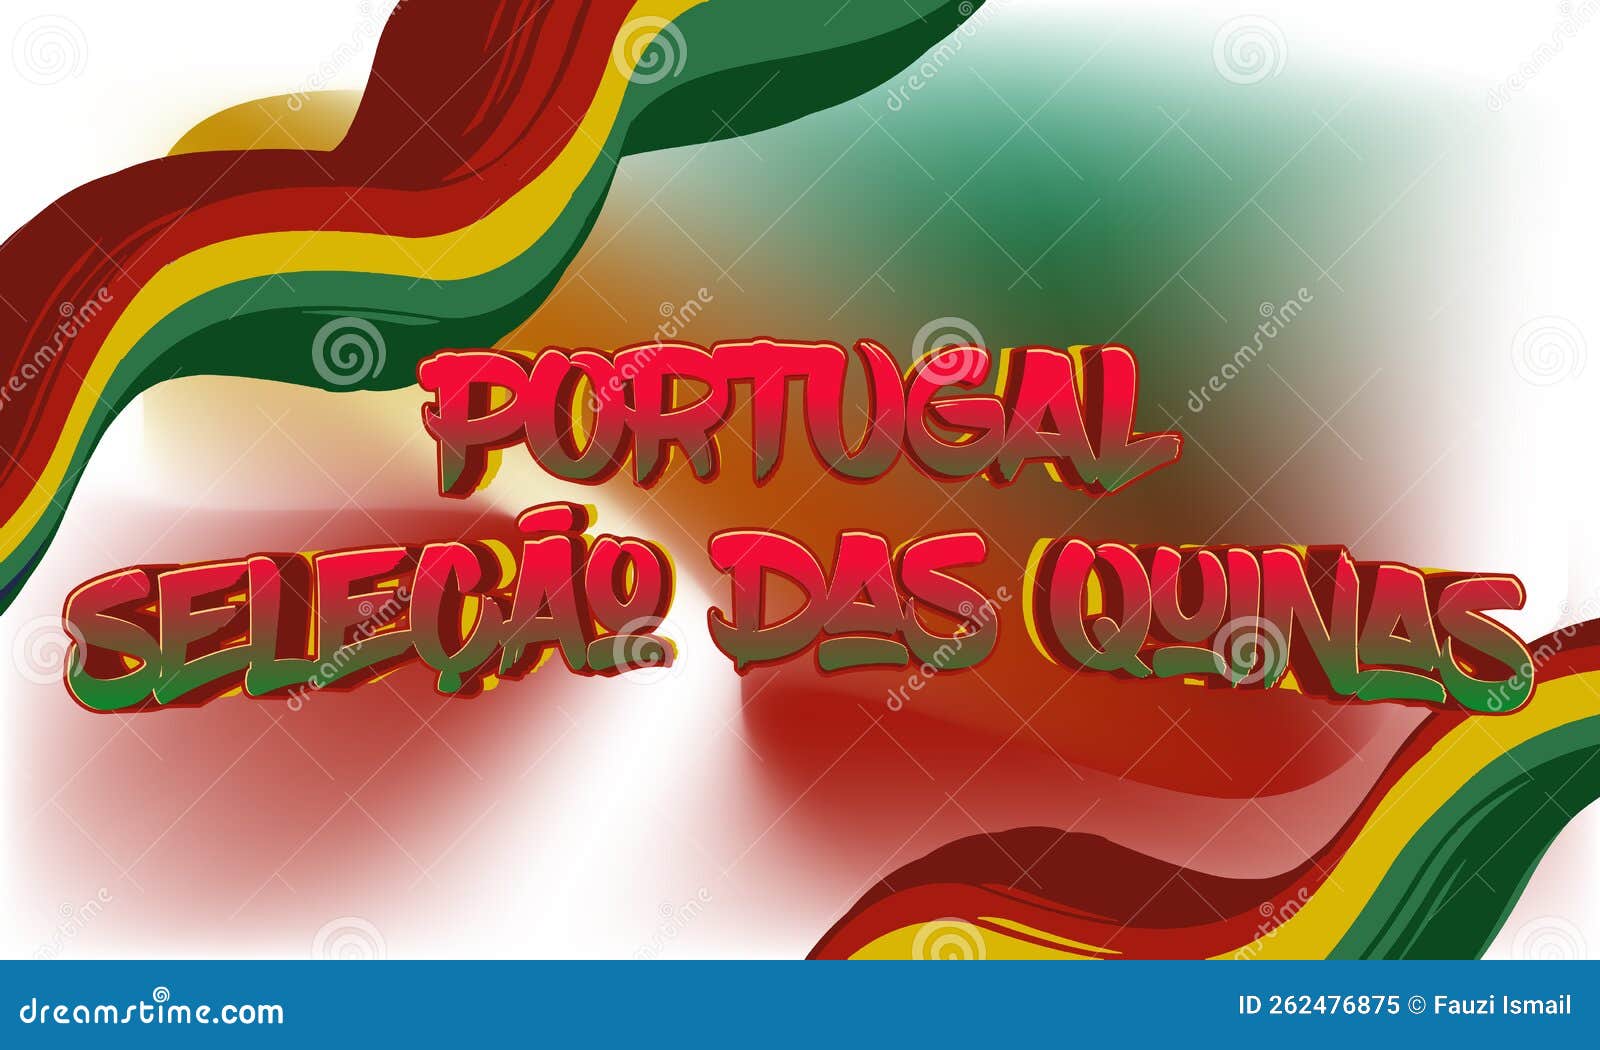 portugal selecao das quinas world football championship background theme